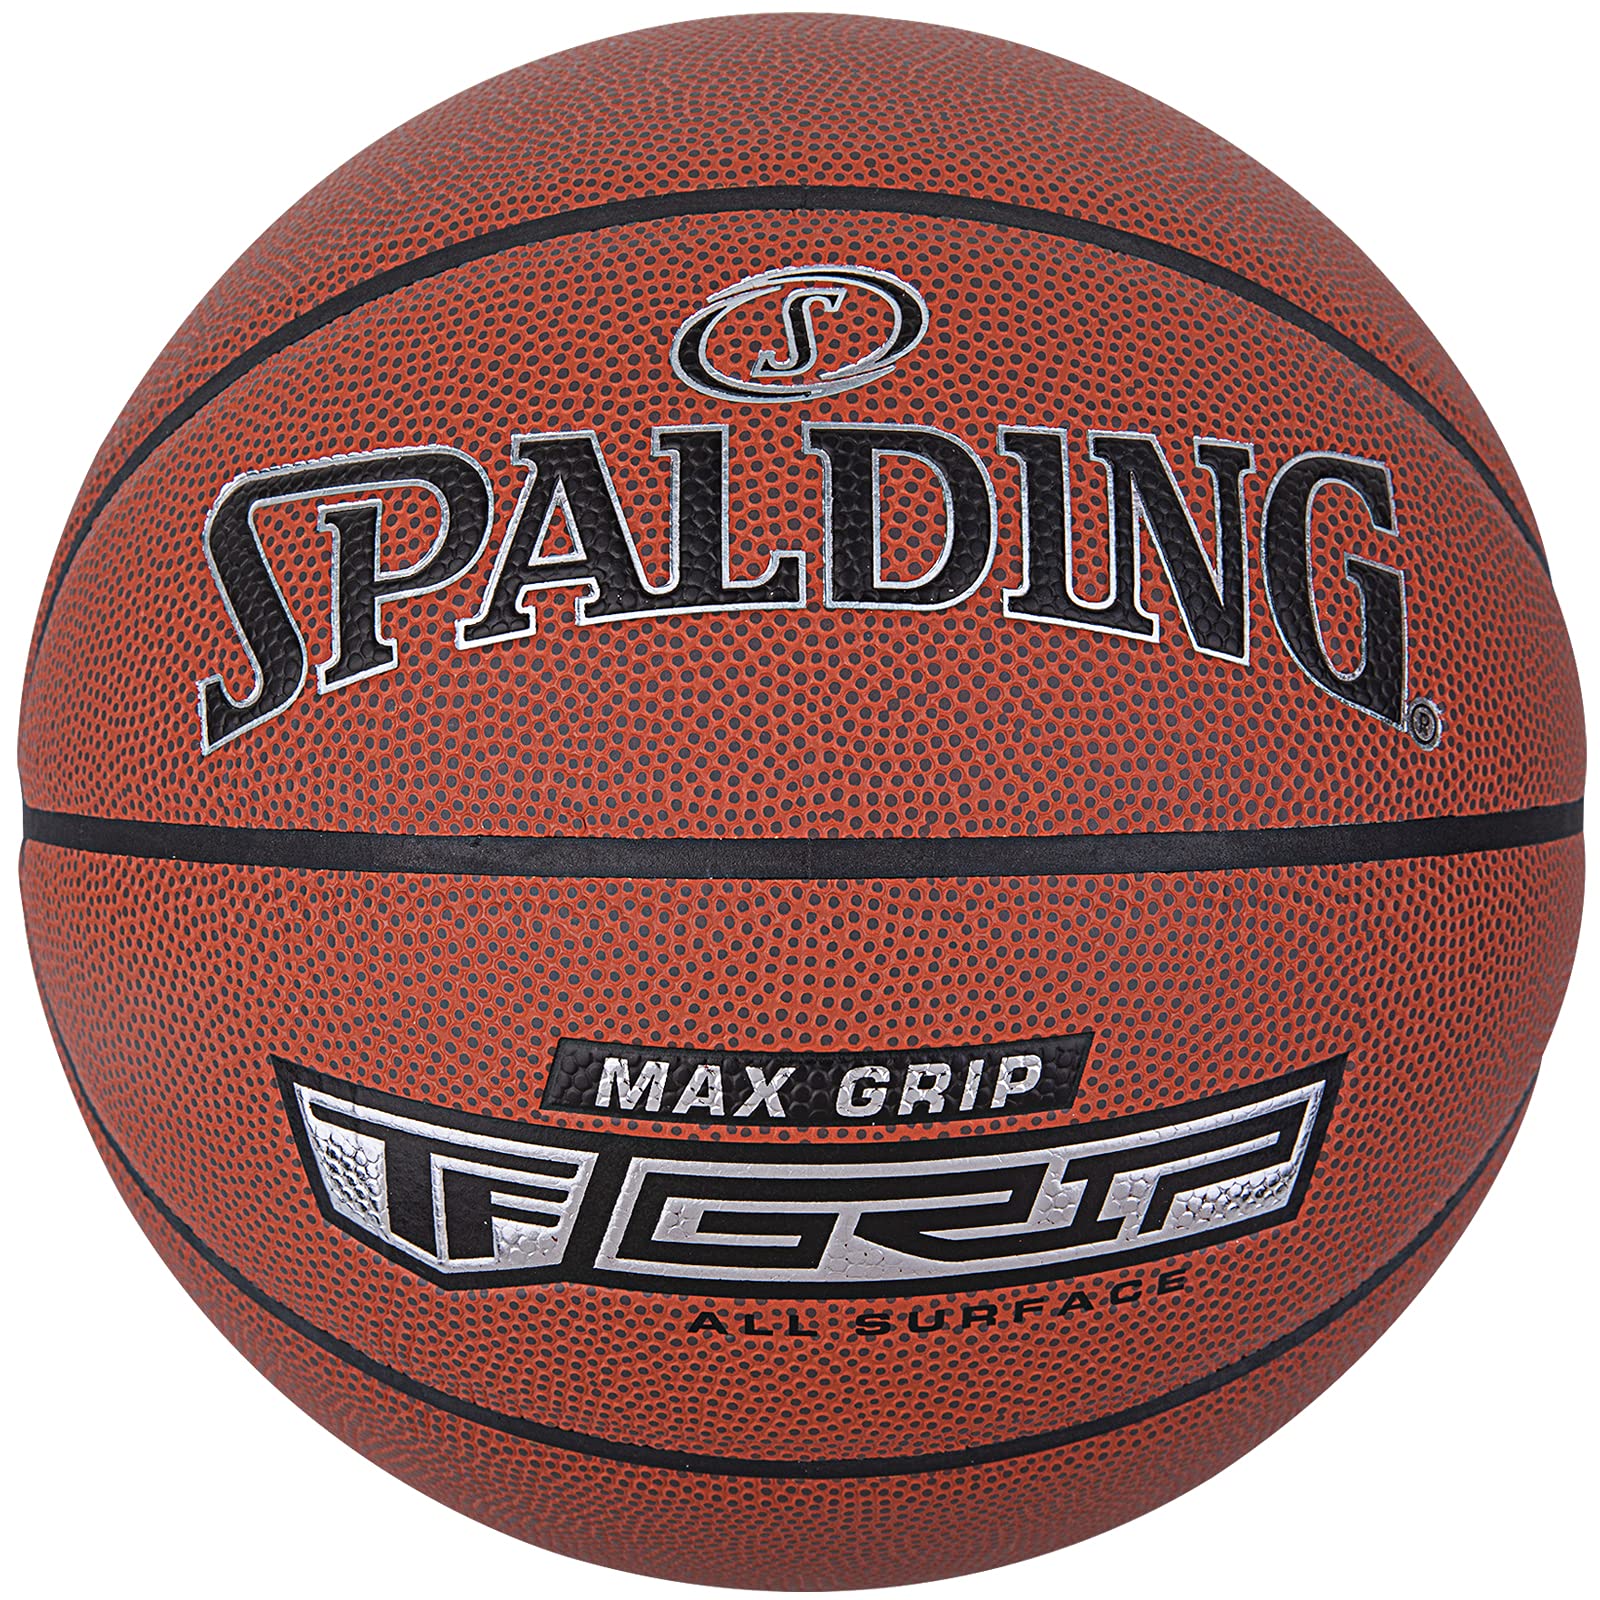 Spalding 76873Z Basketballs Orange 7